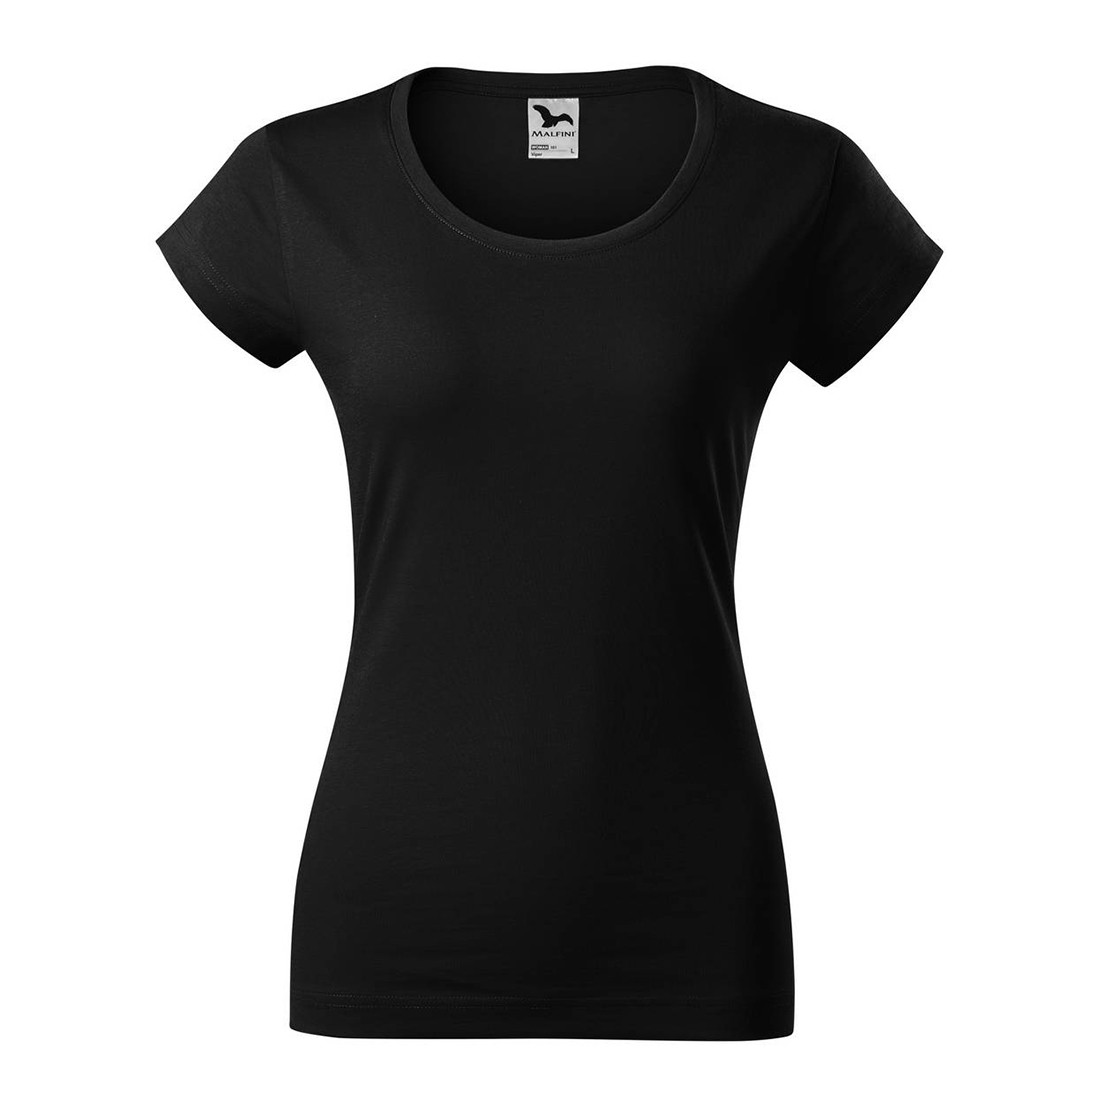 Tee-shirt femme VIPER - Les vêtements de protection